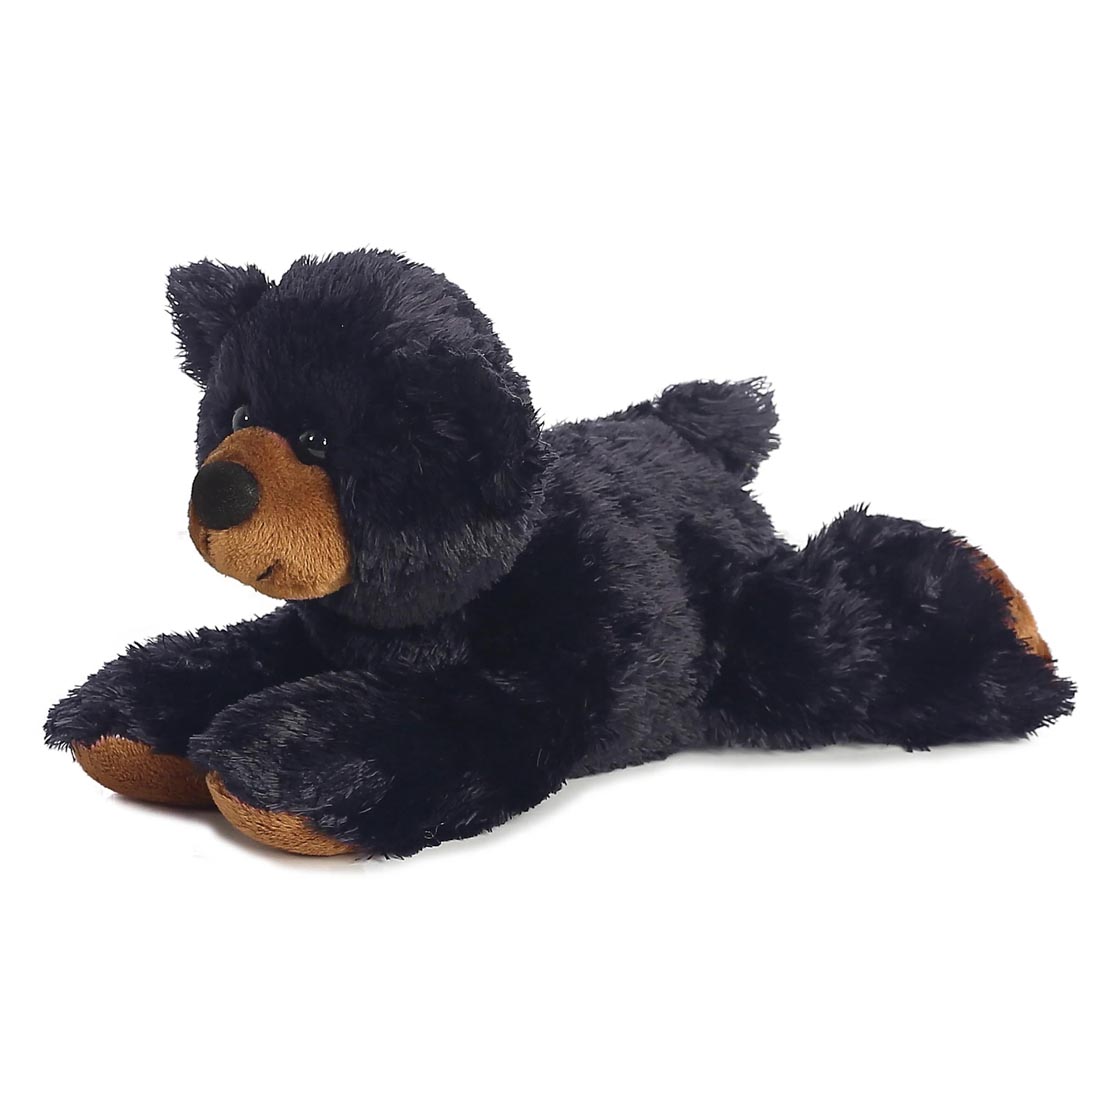 stuffed animal black bear